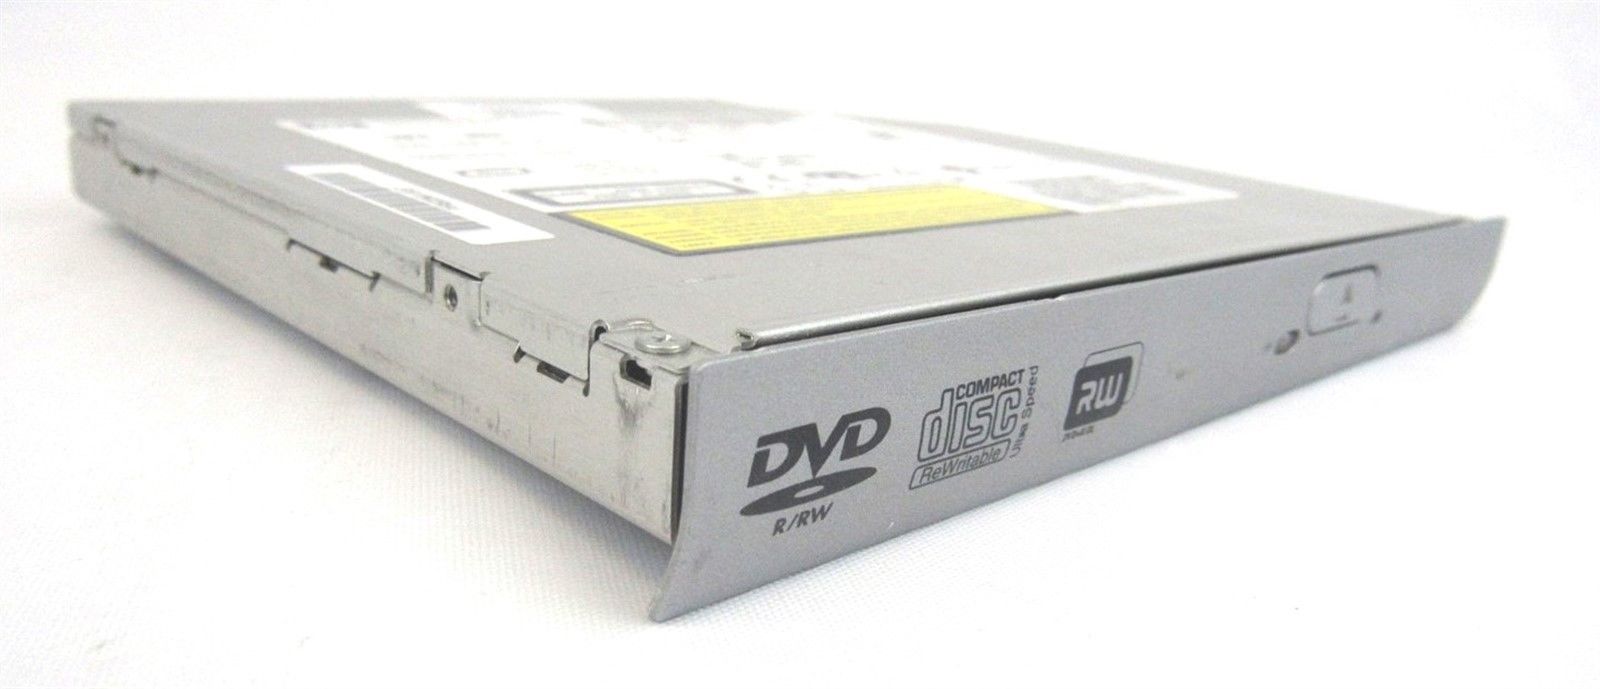 HP Pavilion DV4000 IDE DVD-RW Rewriter Drive Silver 393687-1C0 UJ-840 392079-001